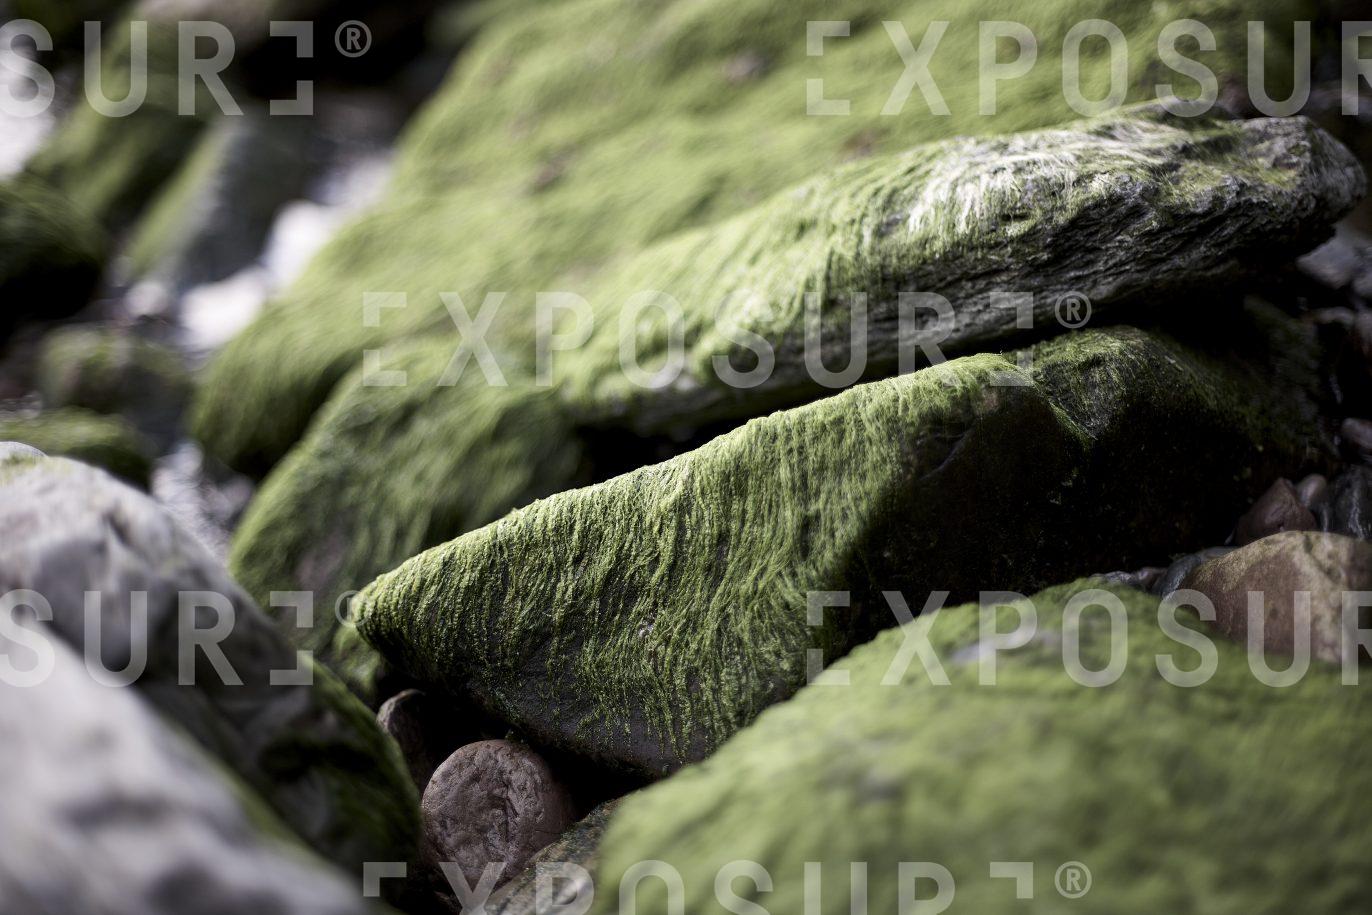 Devon, chlorophyta covered rocks